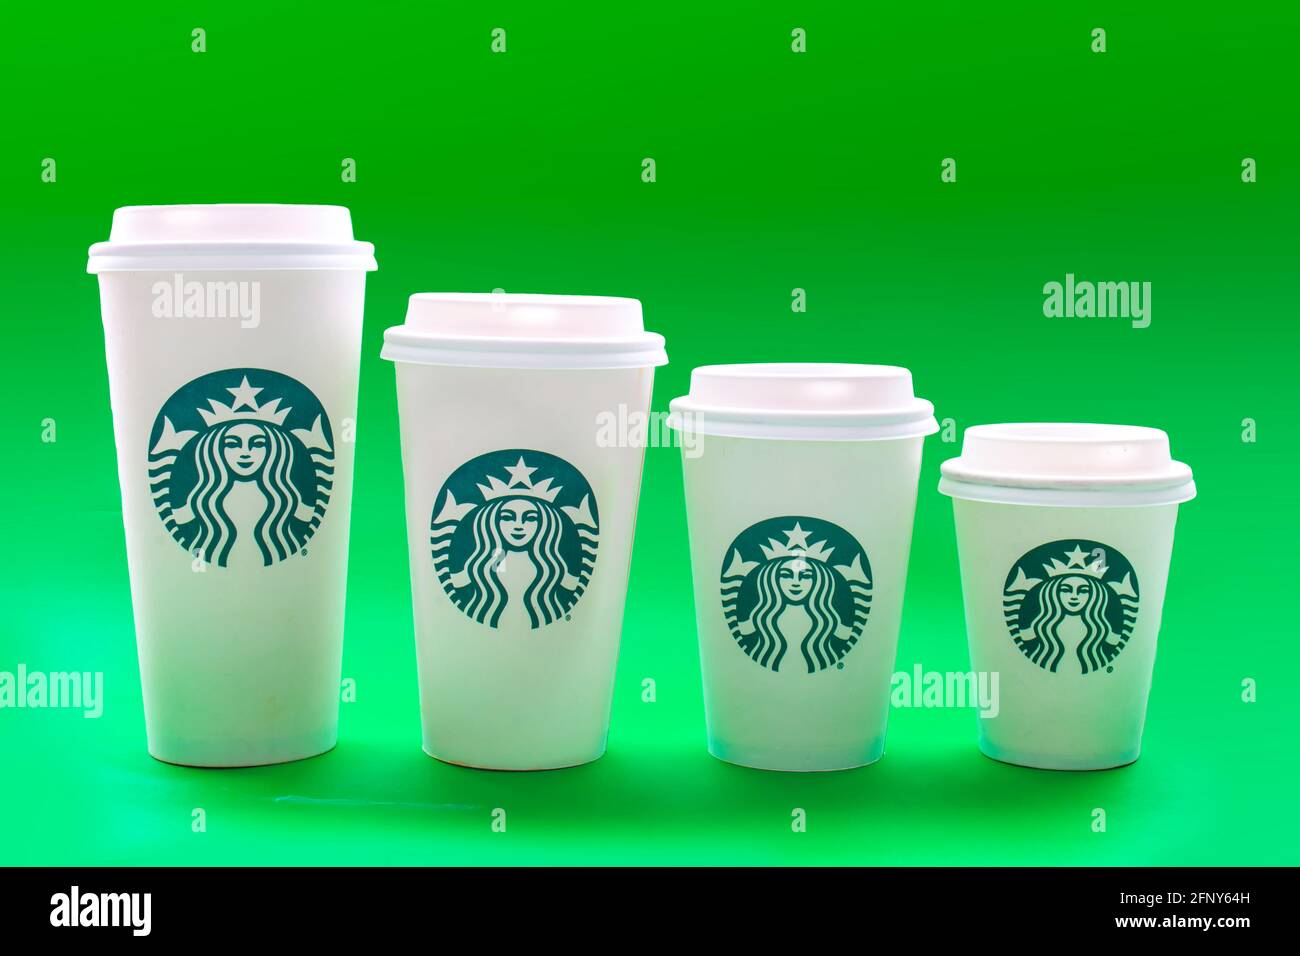 Starbucks Plastic Cup Sizes